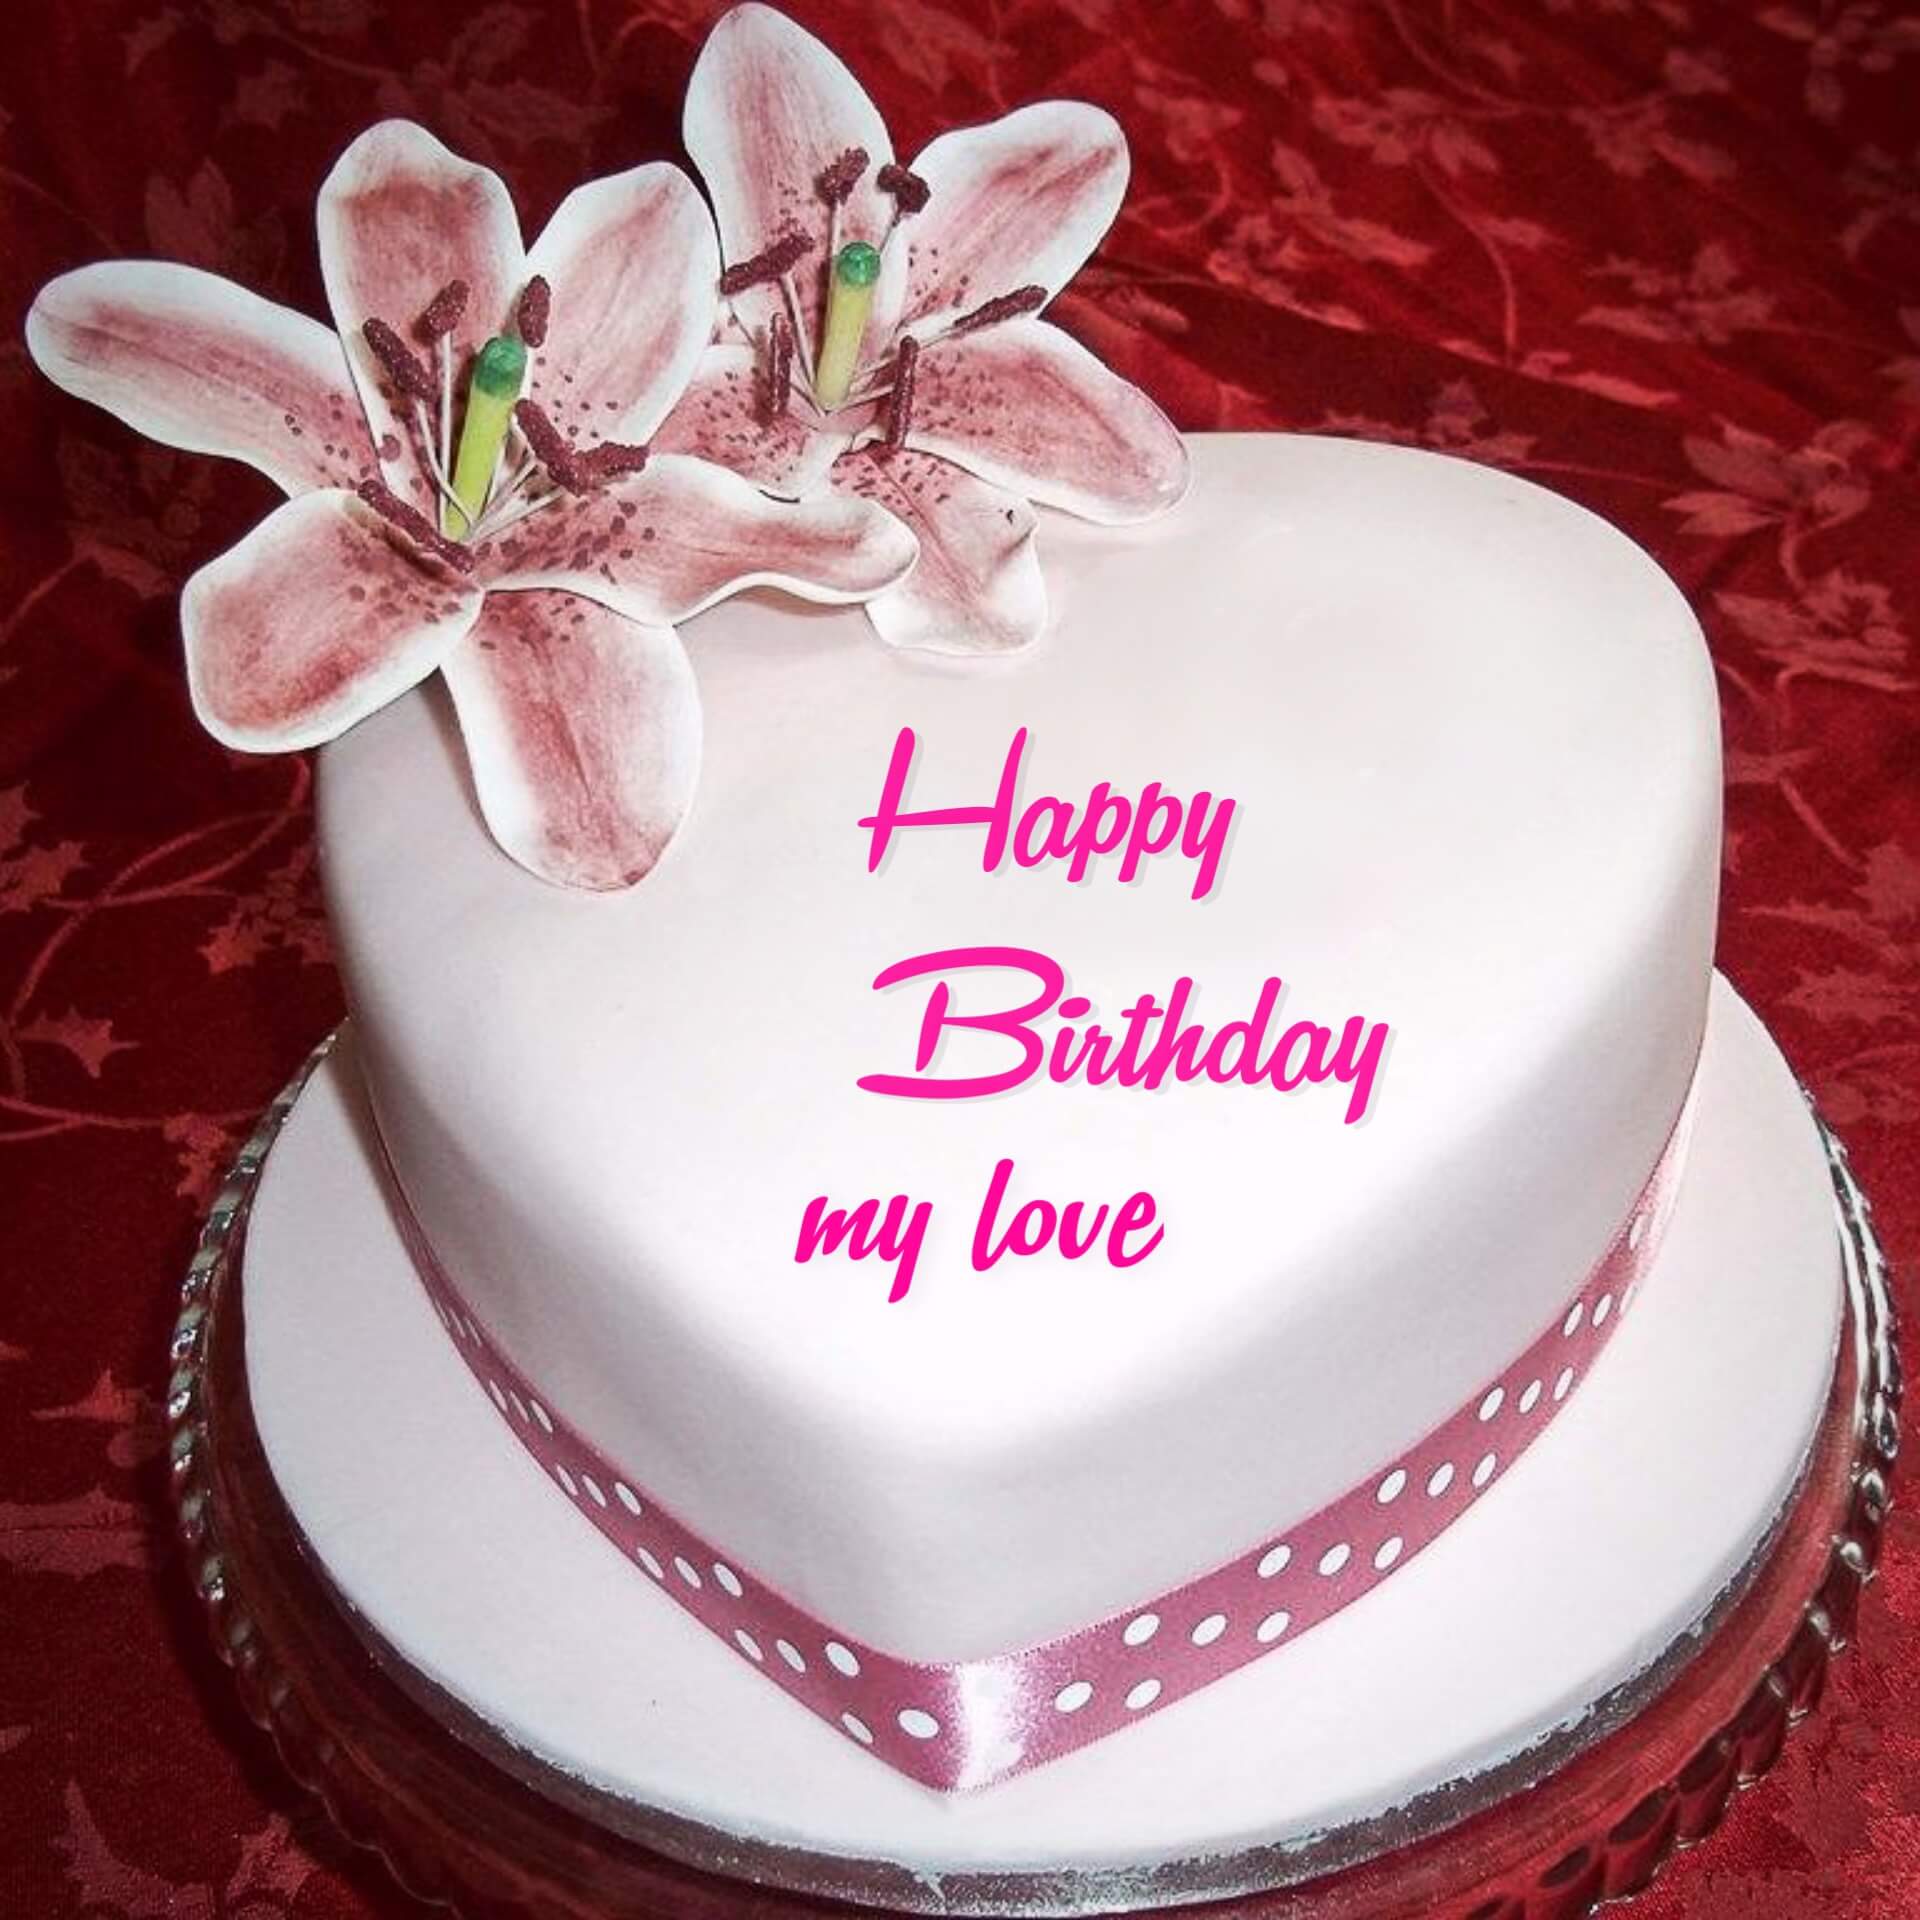 Happy Birthday Images with Cake